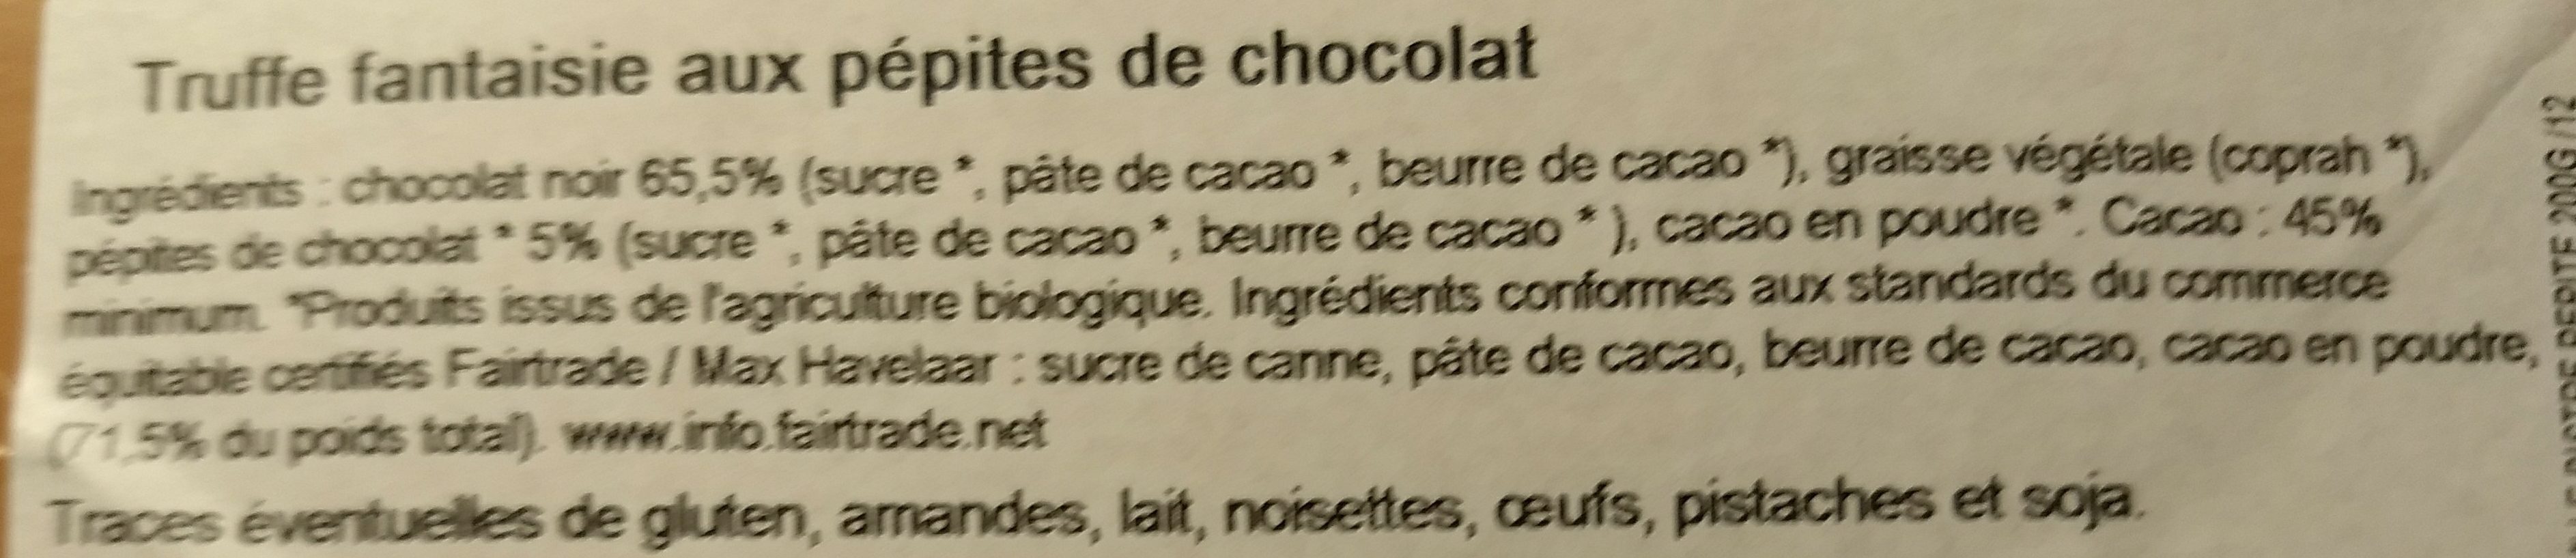 J'adore truffe fantaisie Bio max - Ingrediënten - fr